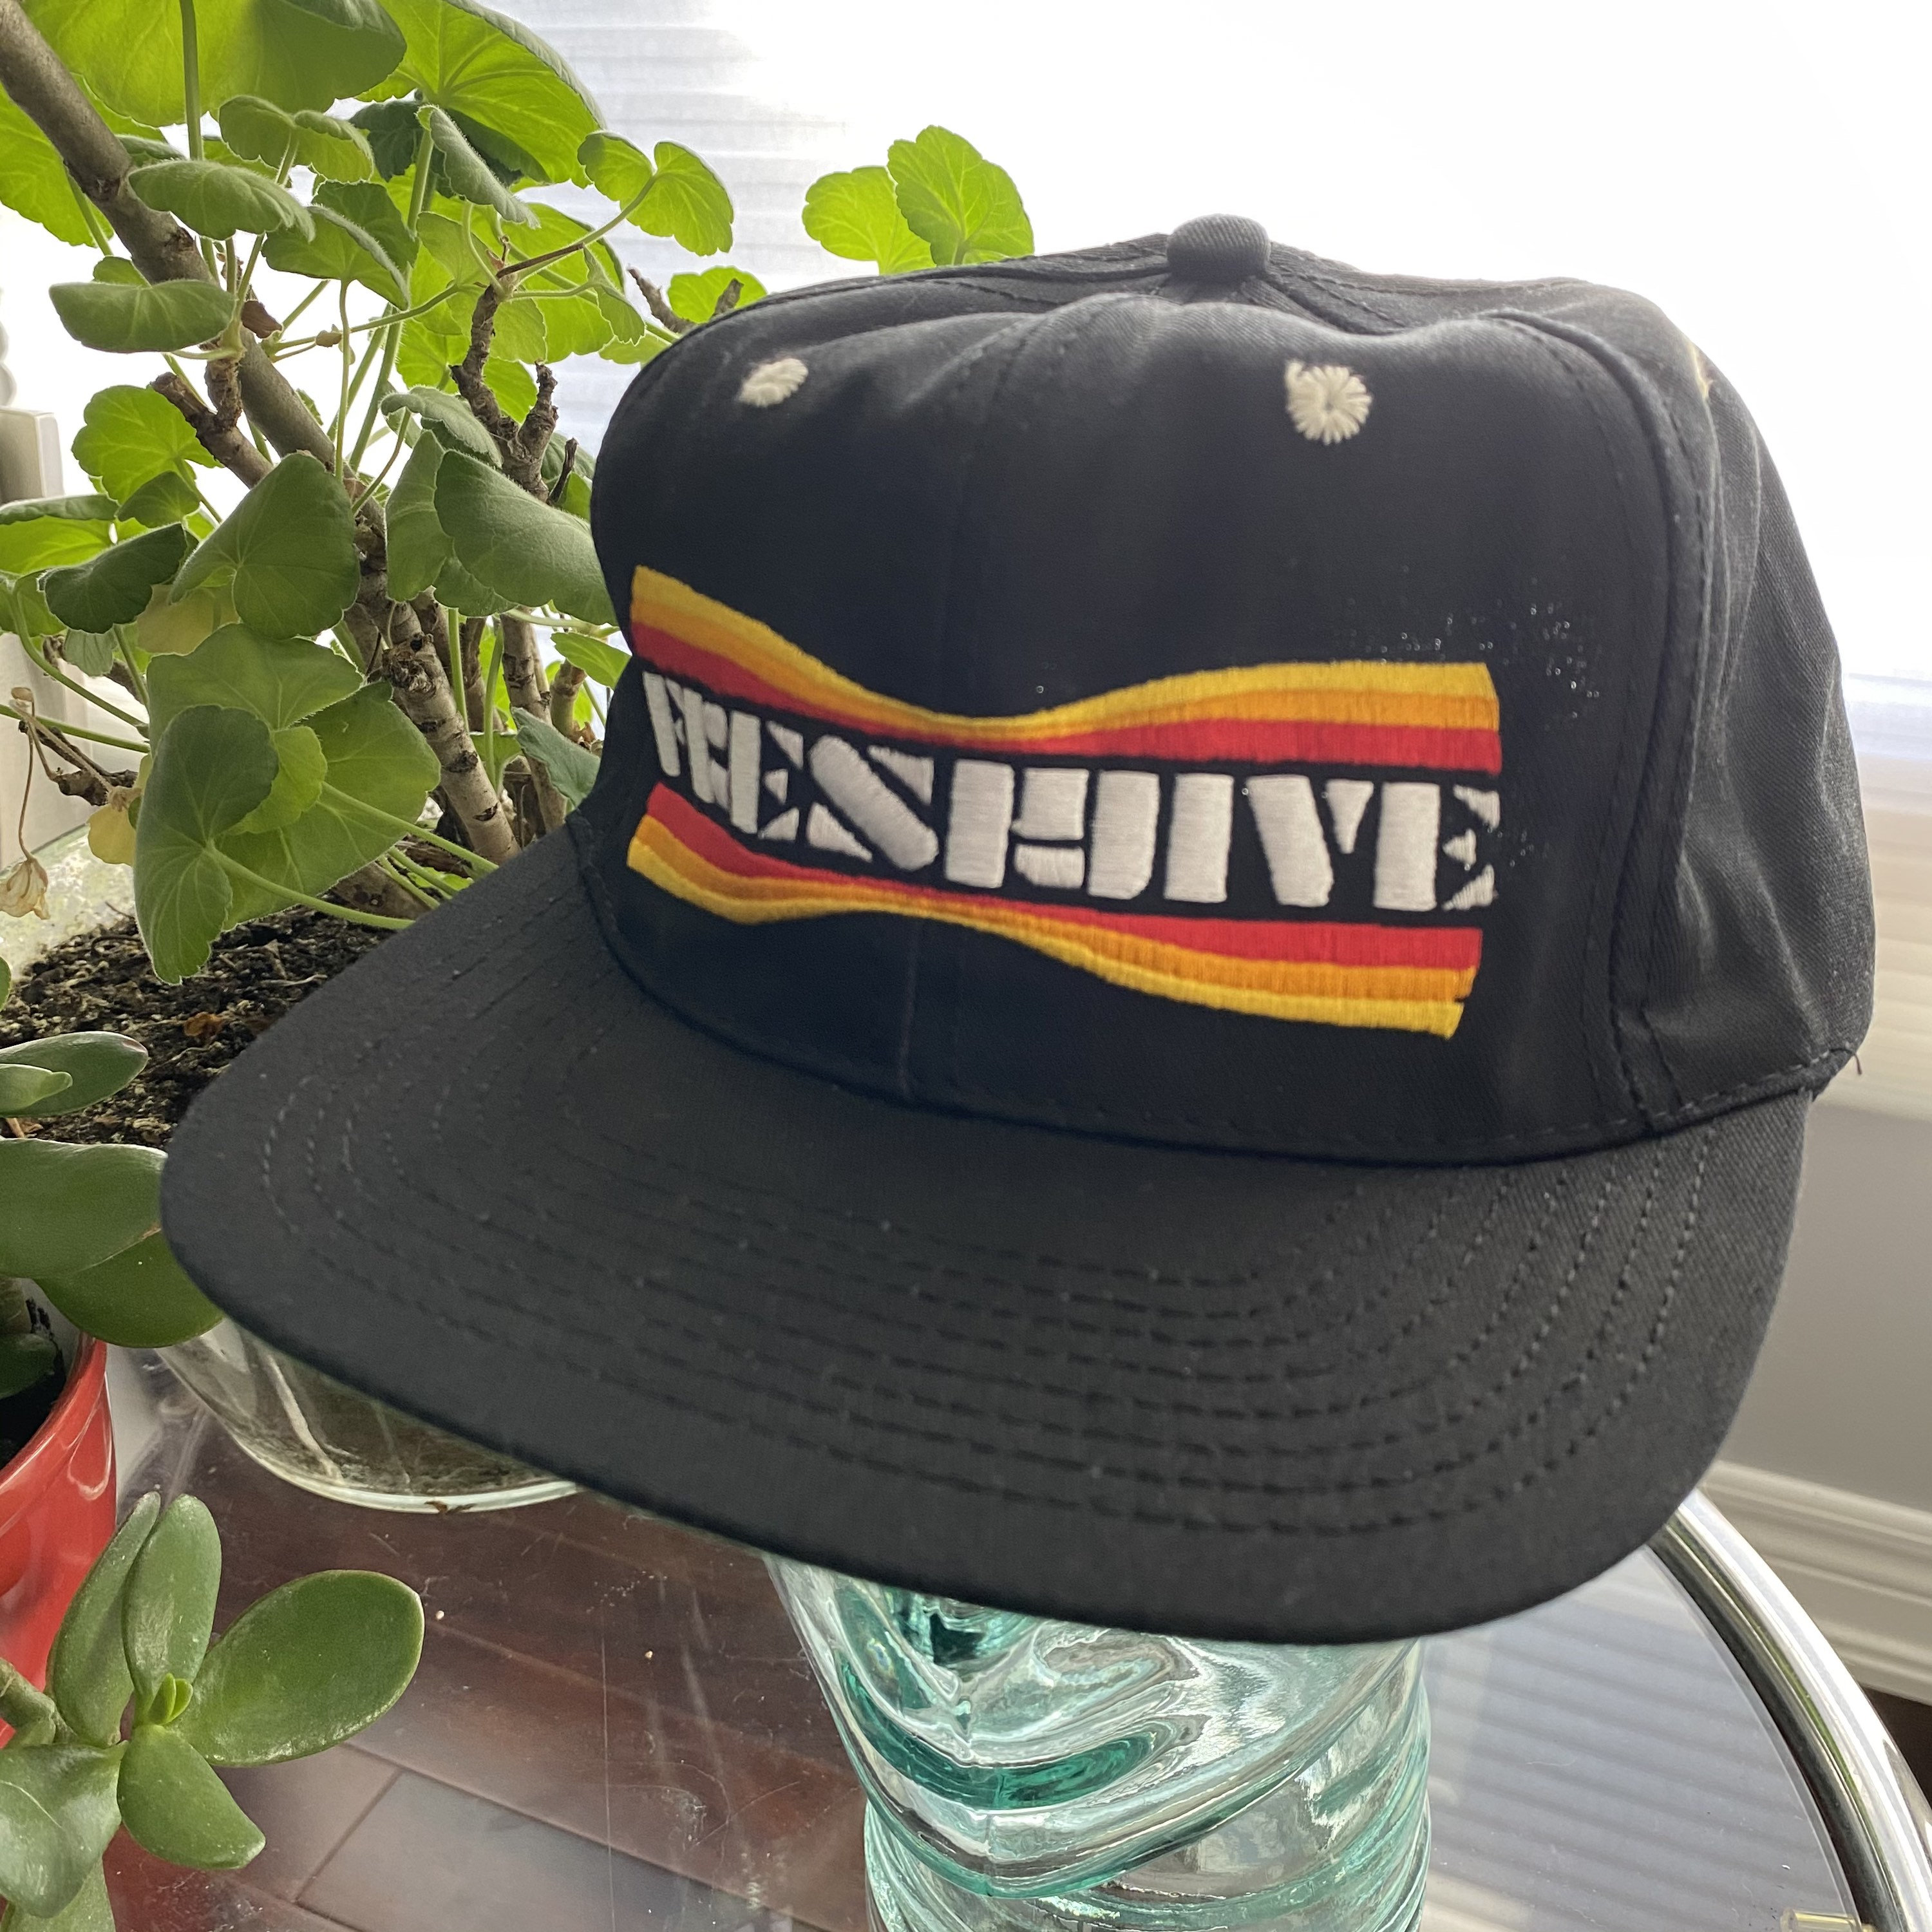 RARE and Authentic Original Freshjive Snapback Hat - Etsy